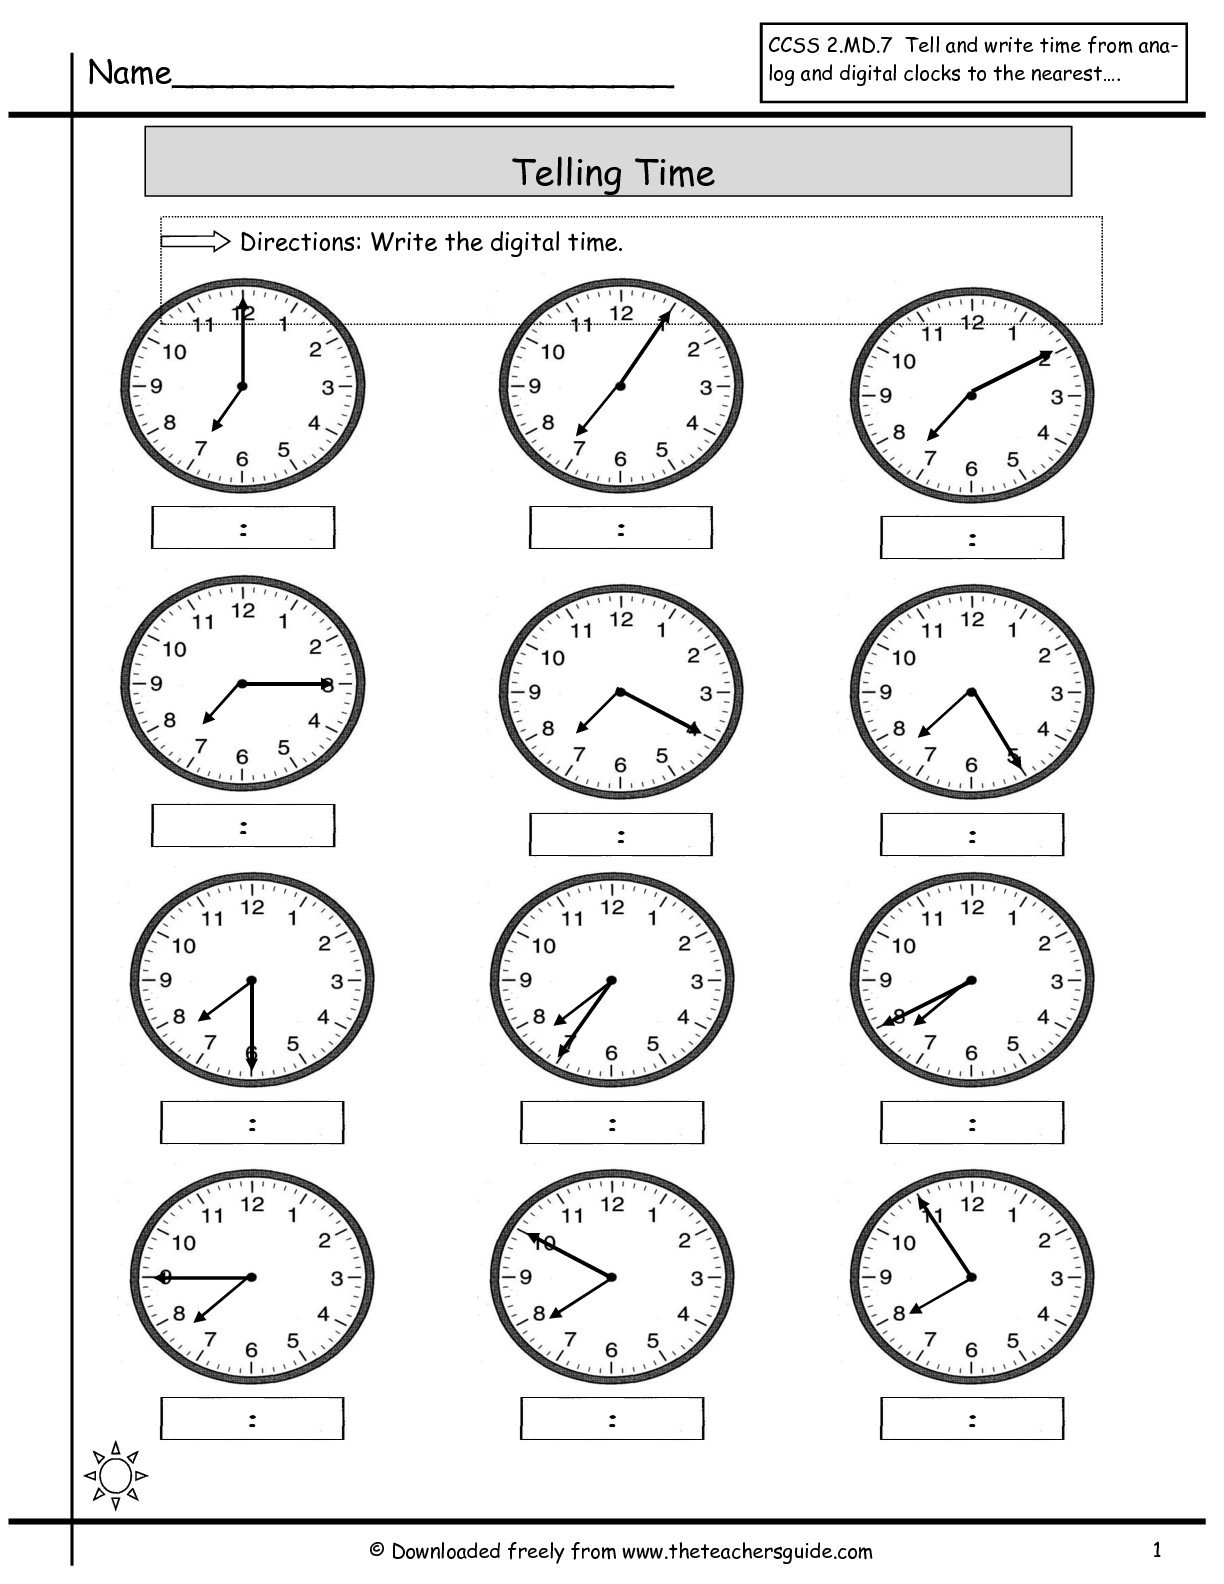 Telling Time Worksheets Online The Best Worksheets Image